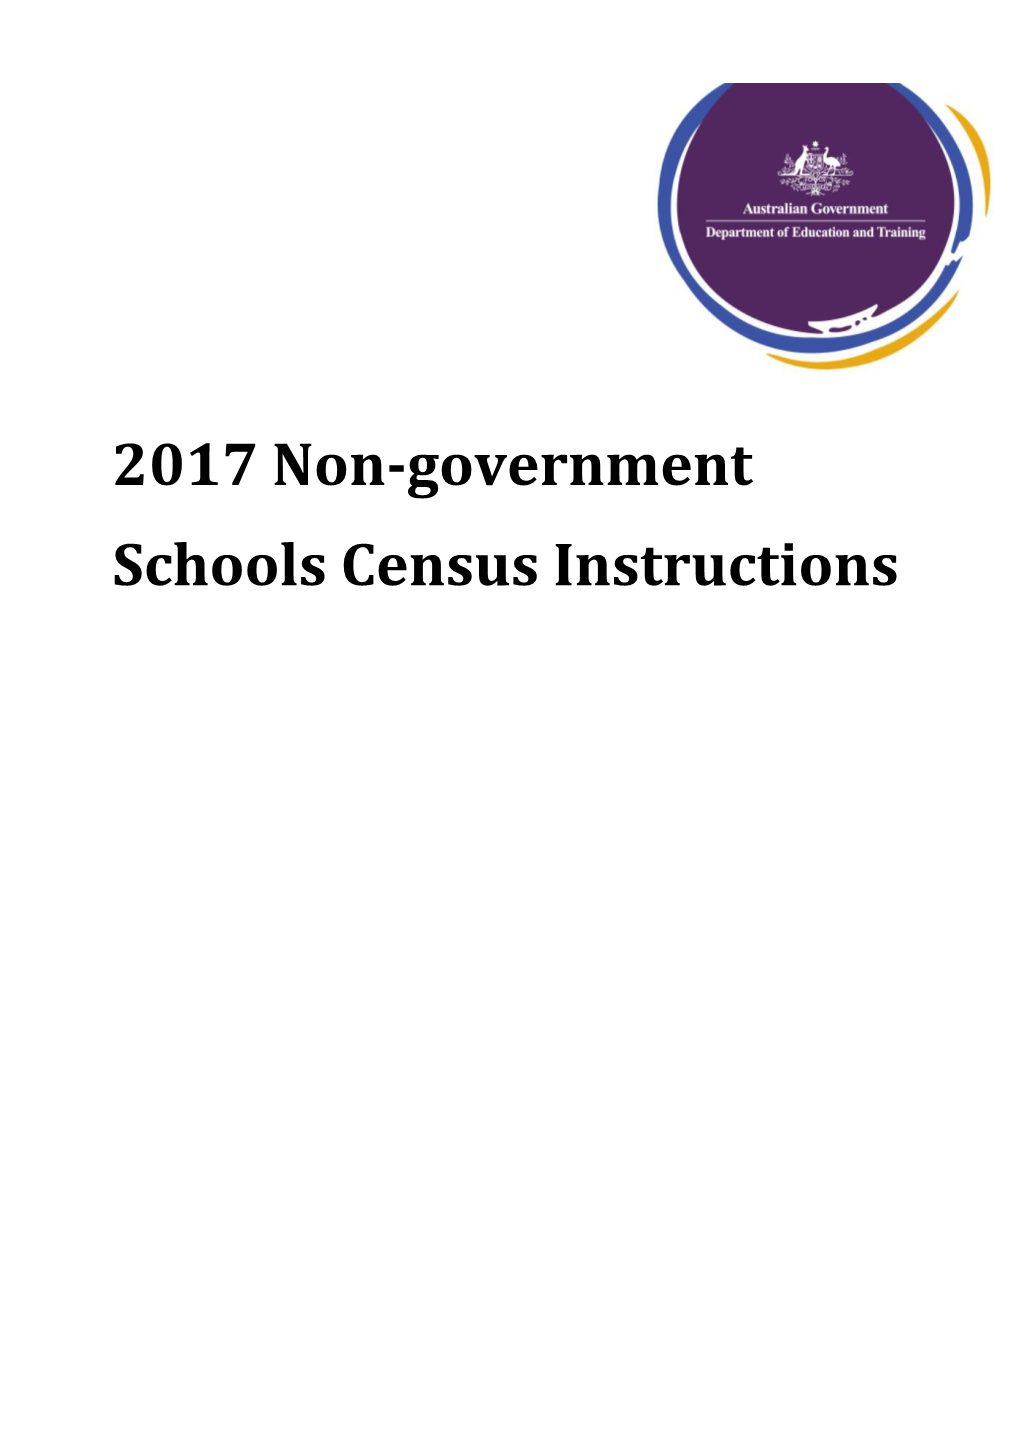 Schools Censusinstructions